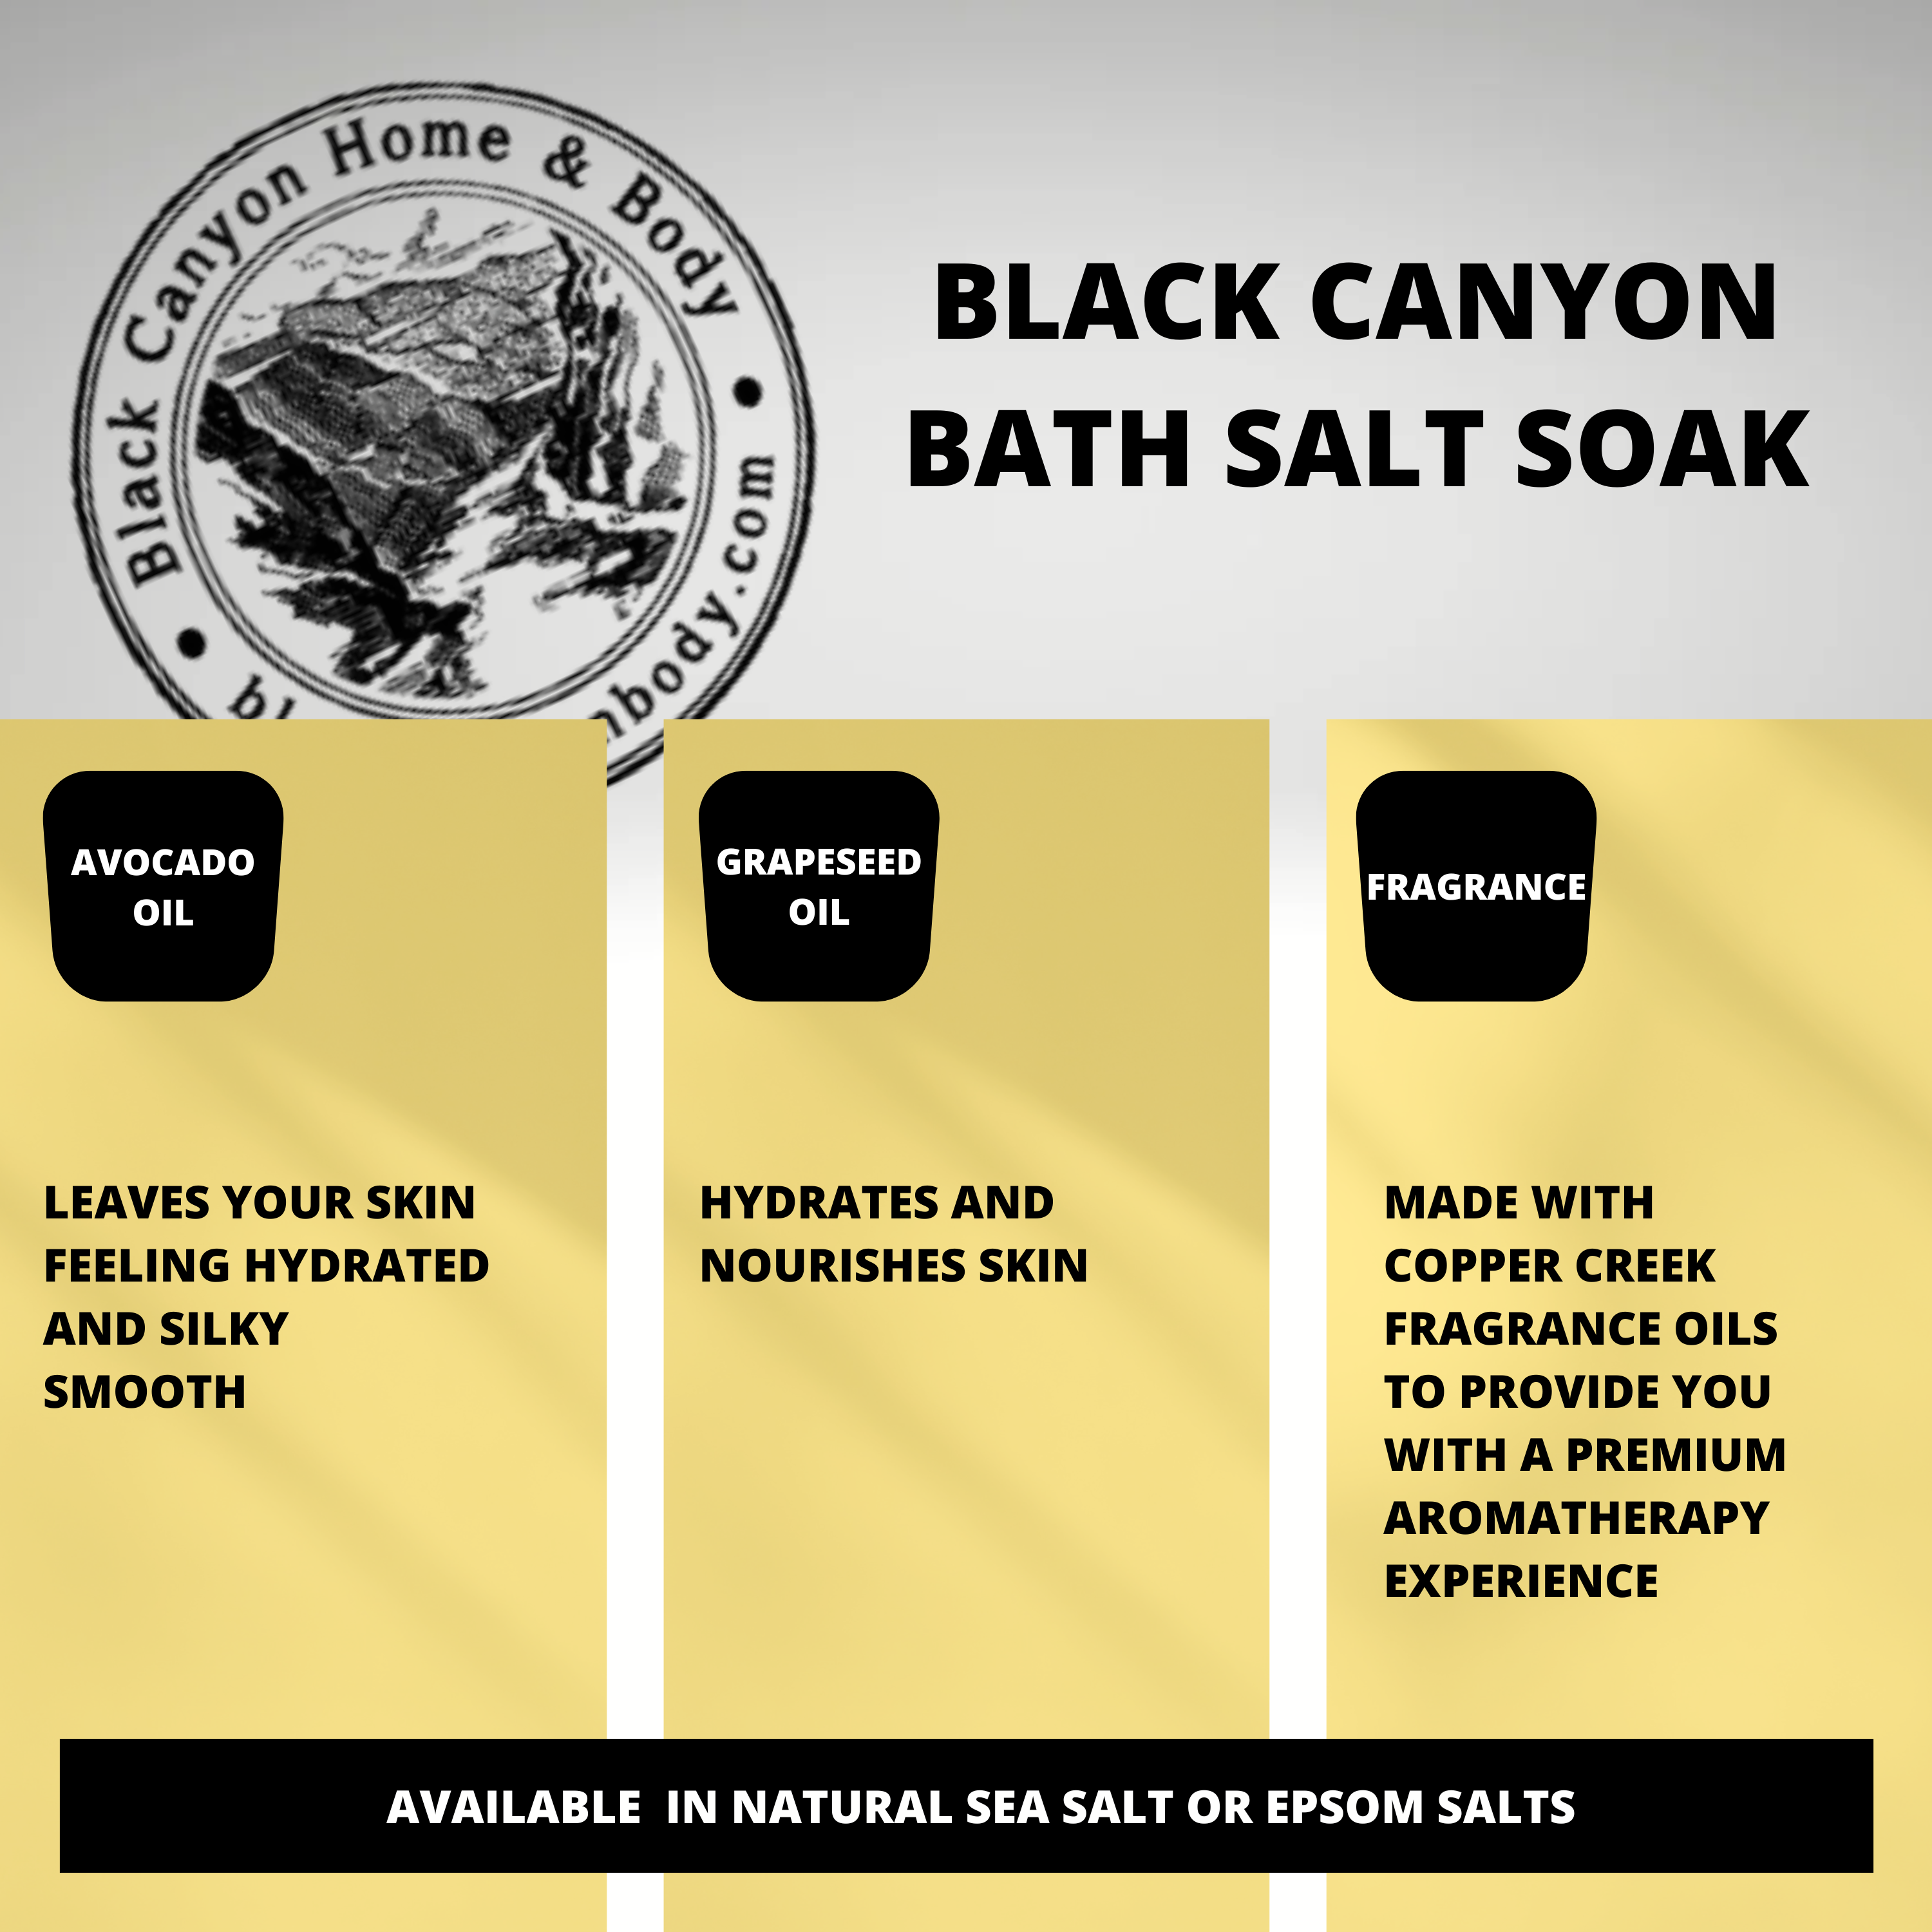 Black Canyon Black Coconut Scented Epsom Salt Bath Soak